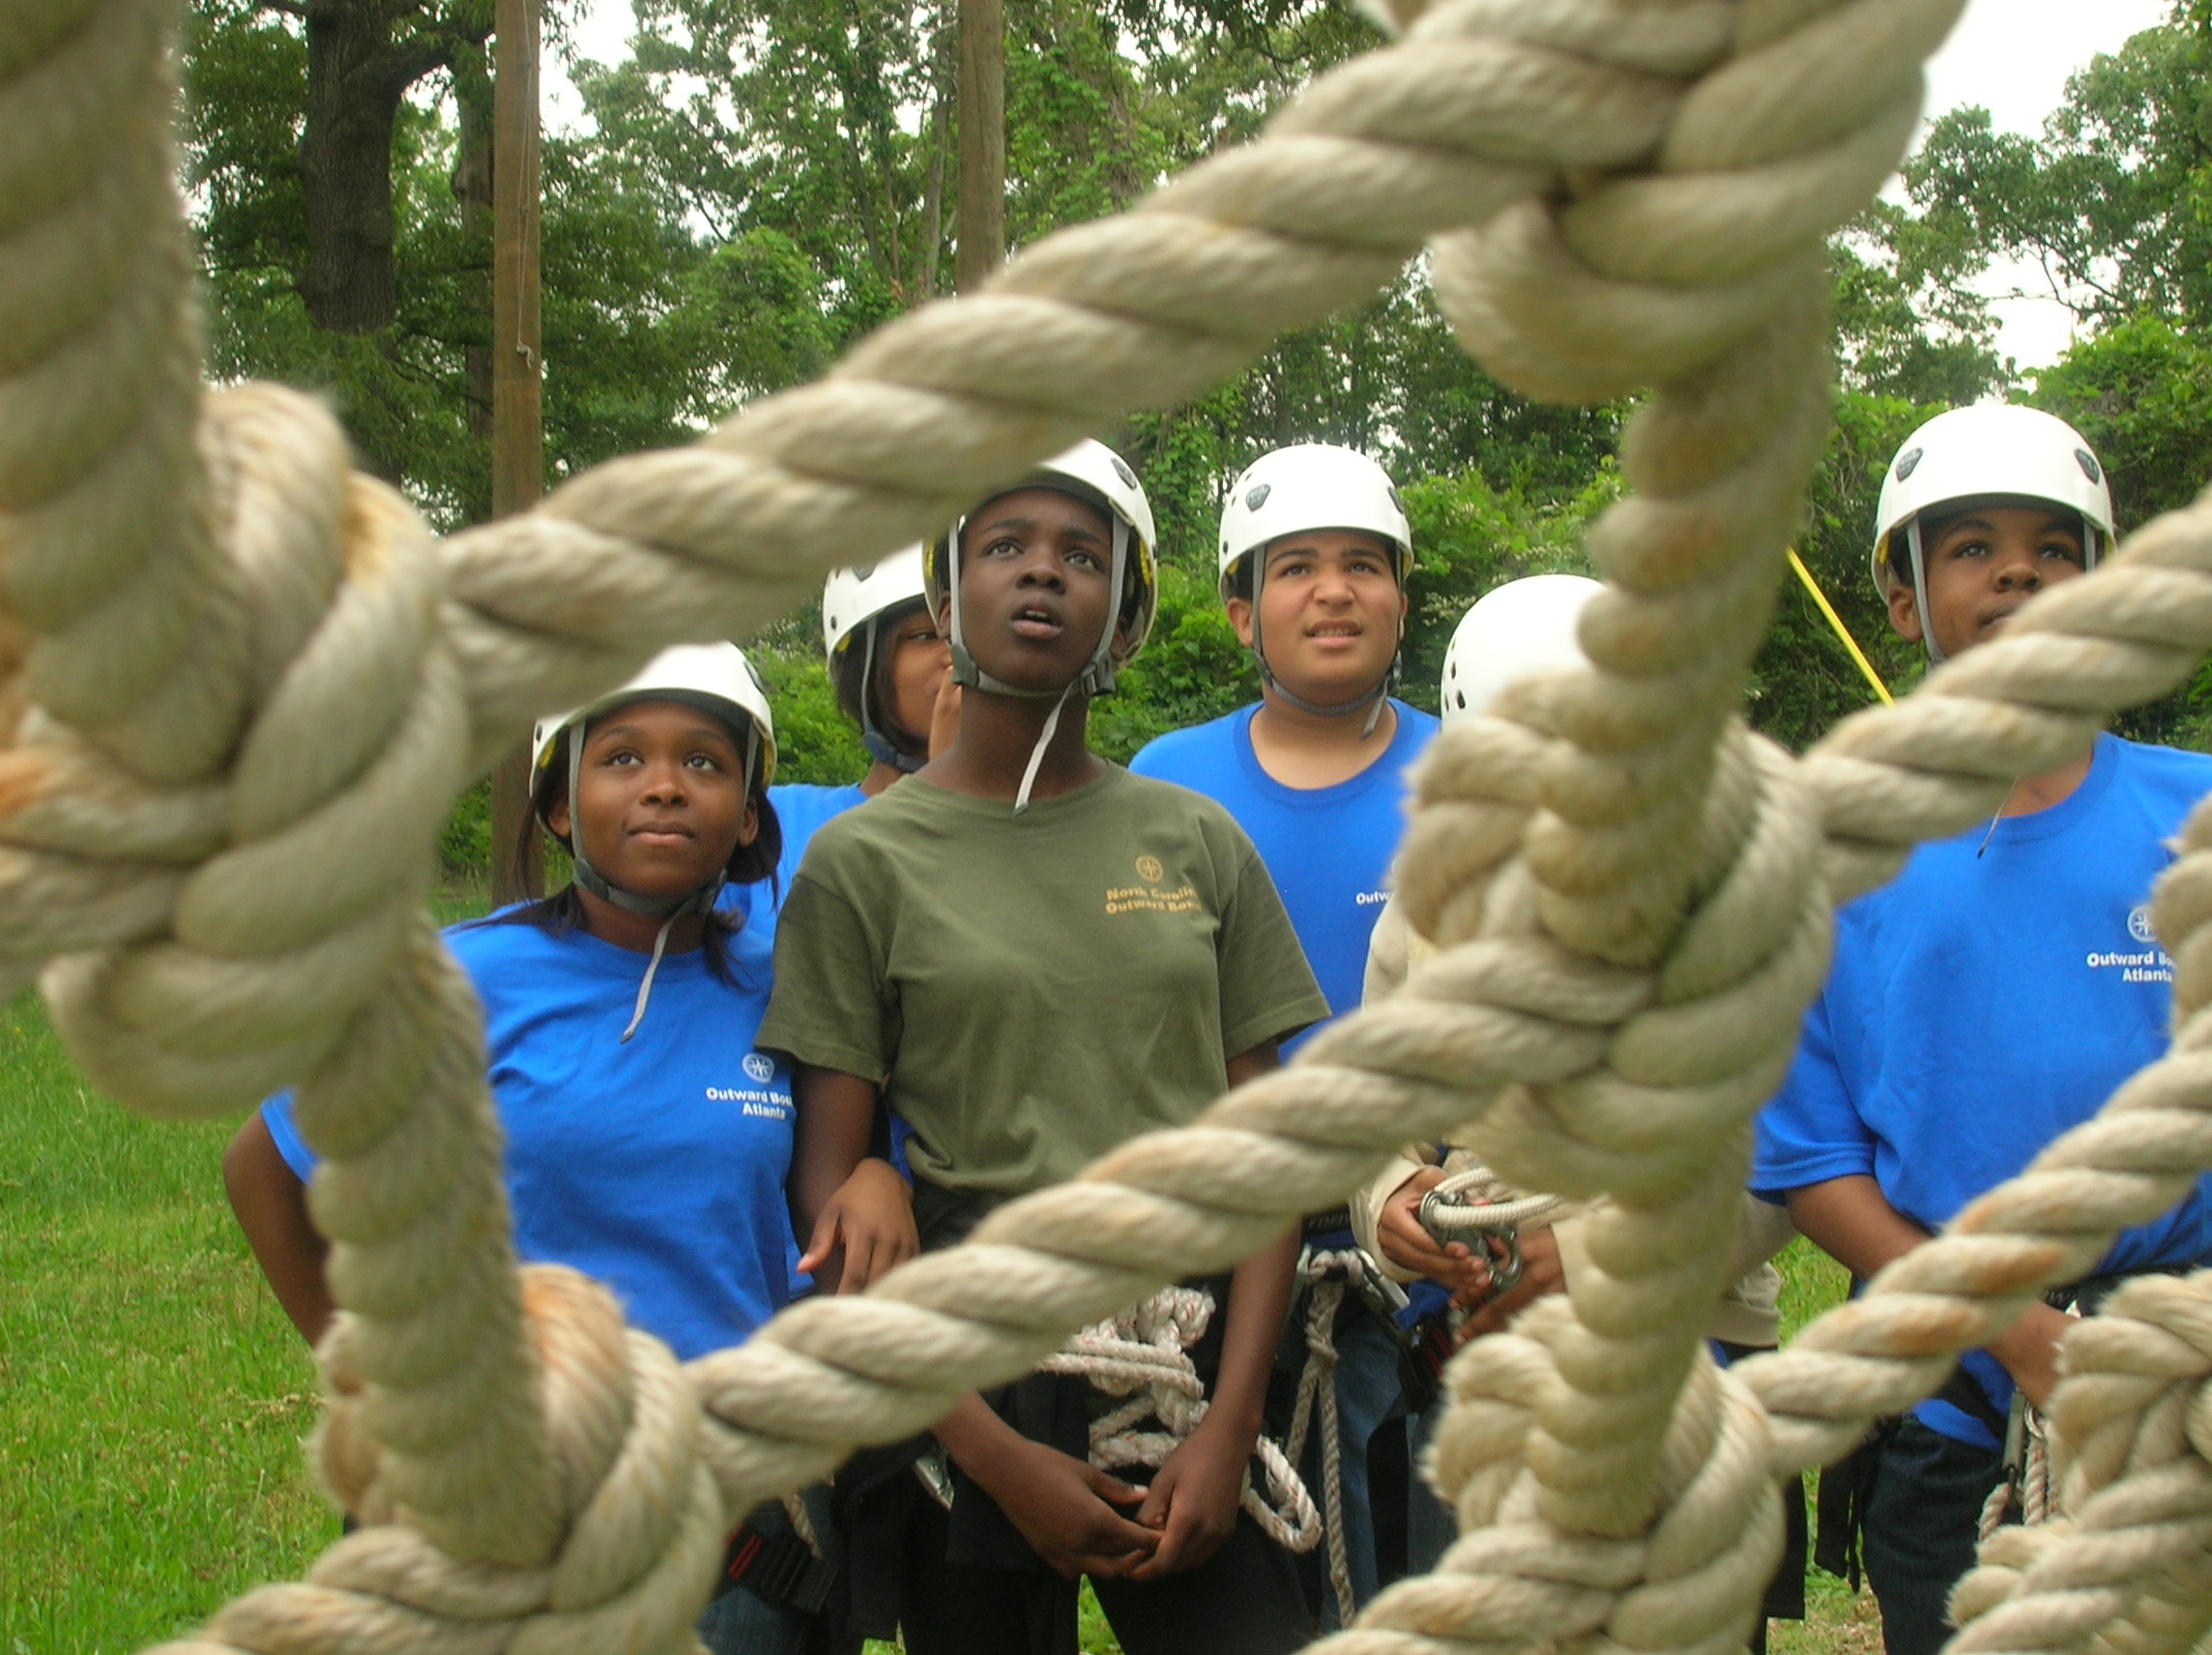 High ropes course in Atlanta